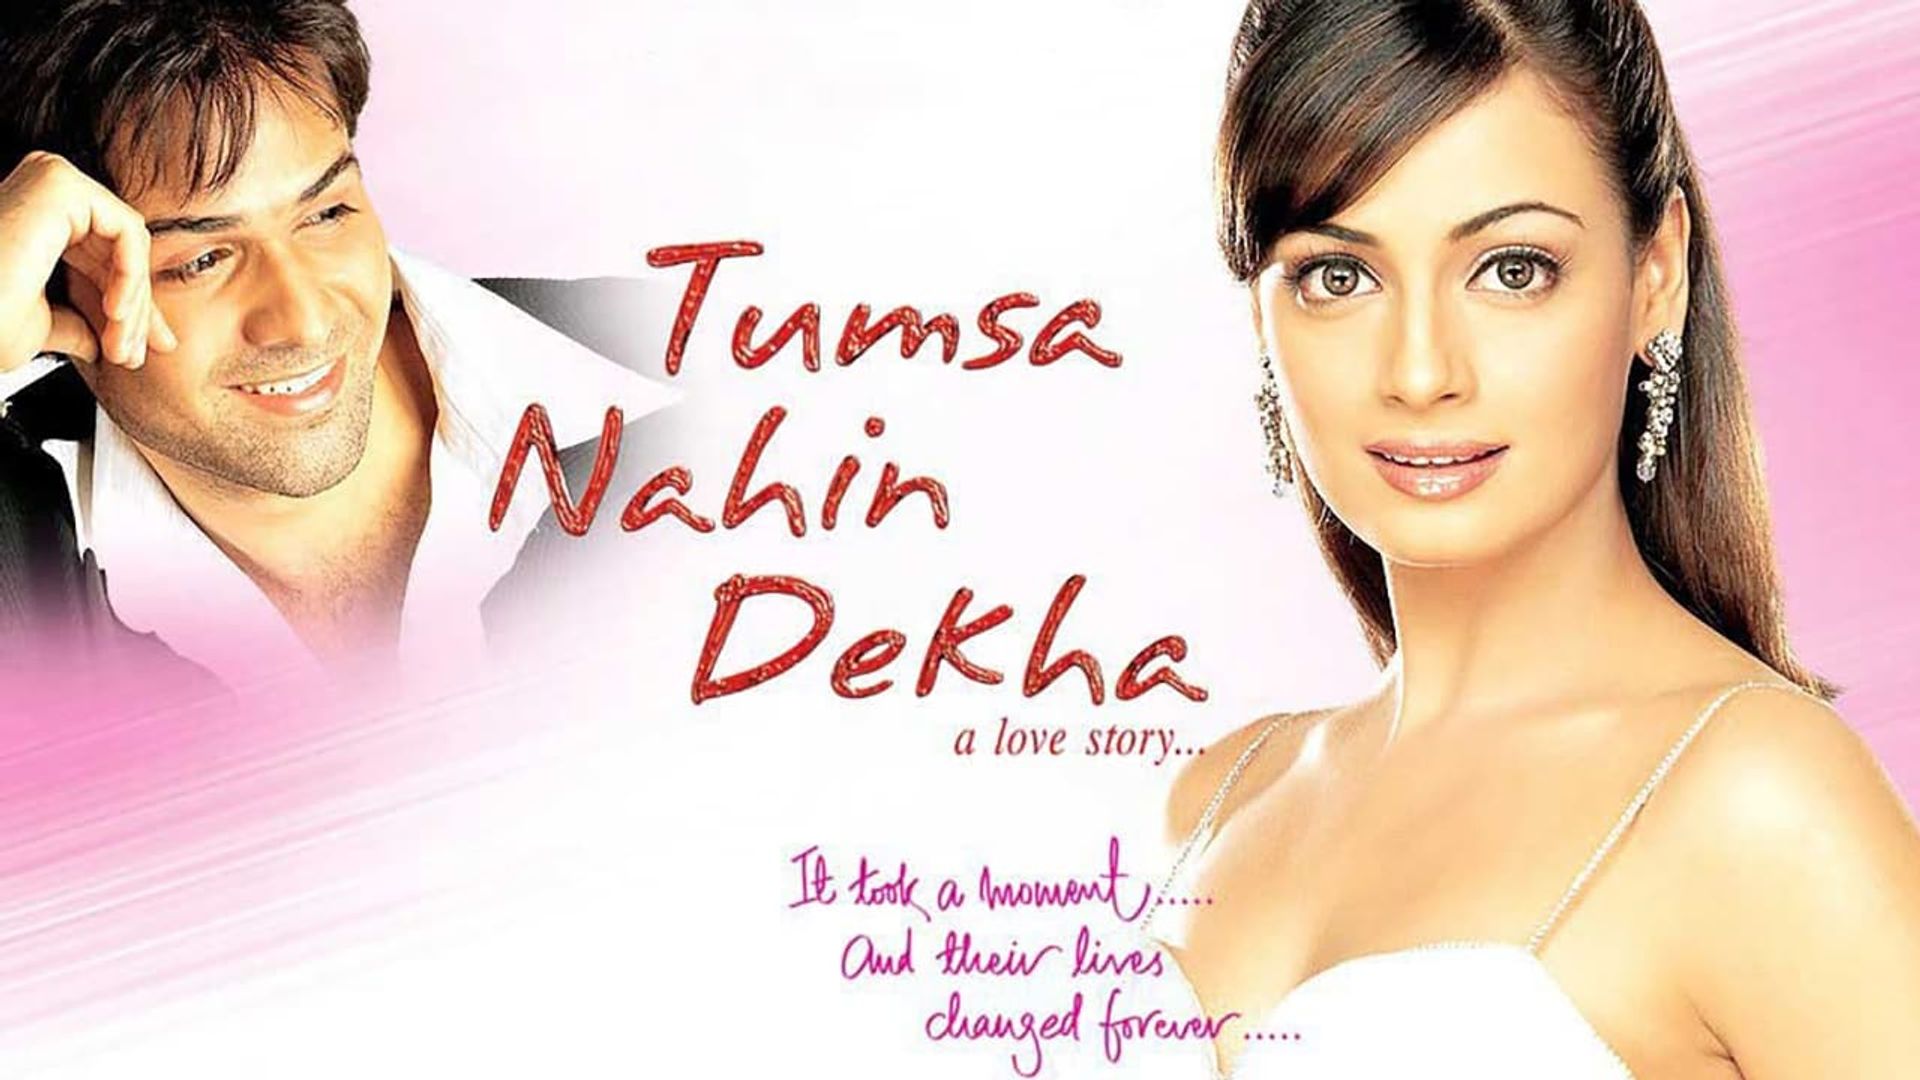 Tumsa Nahin Dekha background